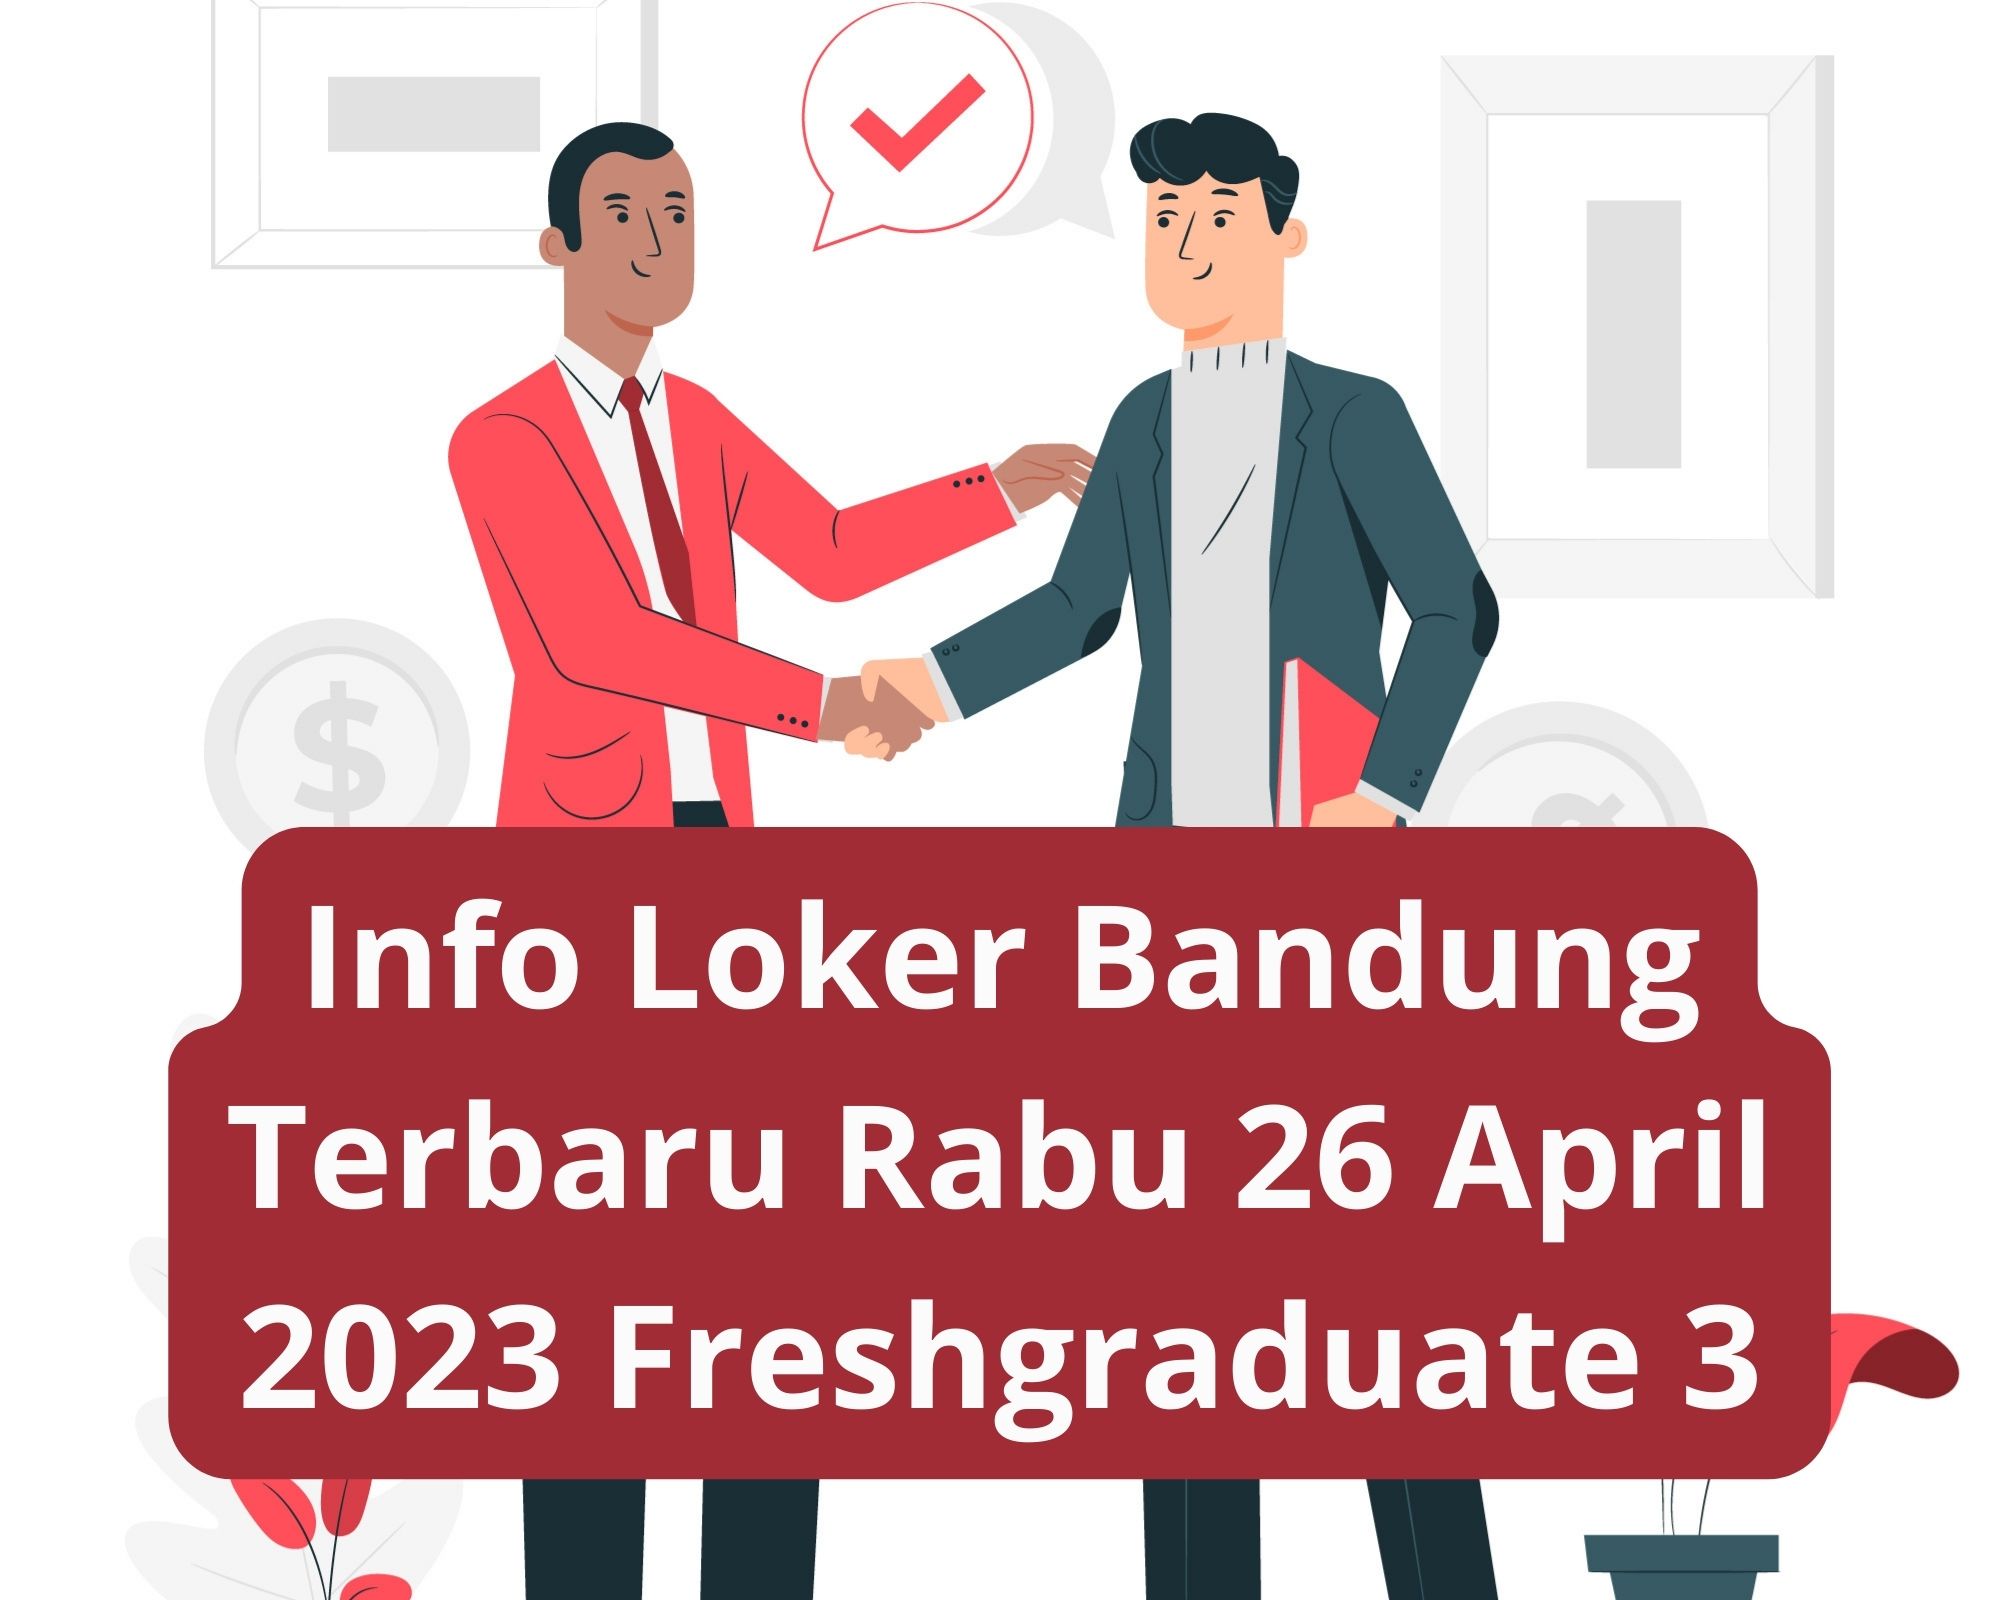 Info Loker Bandung Terbaru Rabu 26 April 2023 Freshgraduate 3